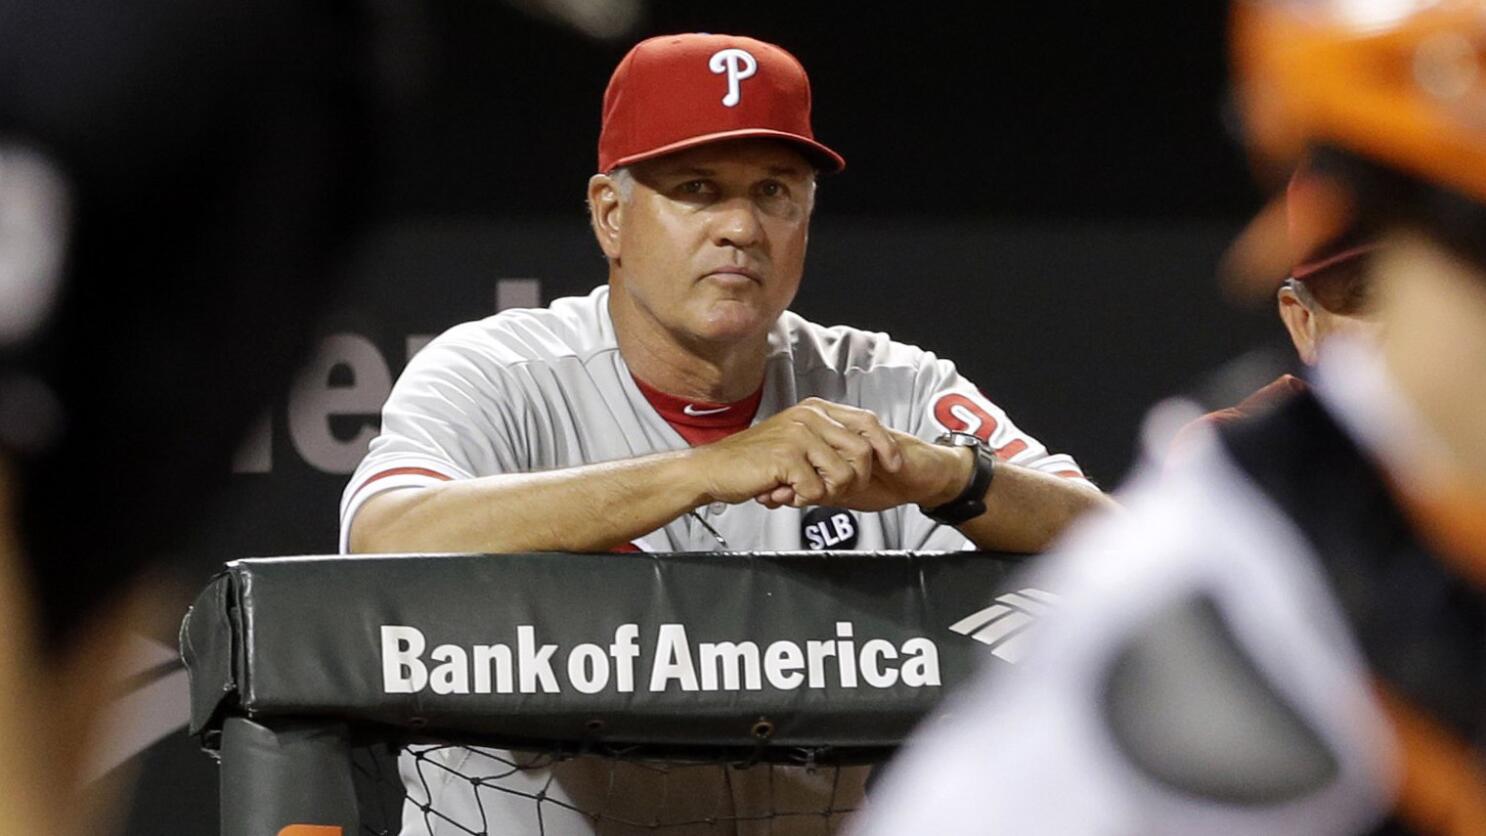 Ryne Sandberg vs. the second basemen the Phillies had after they